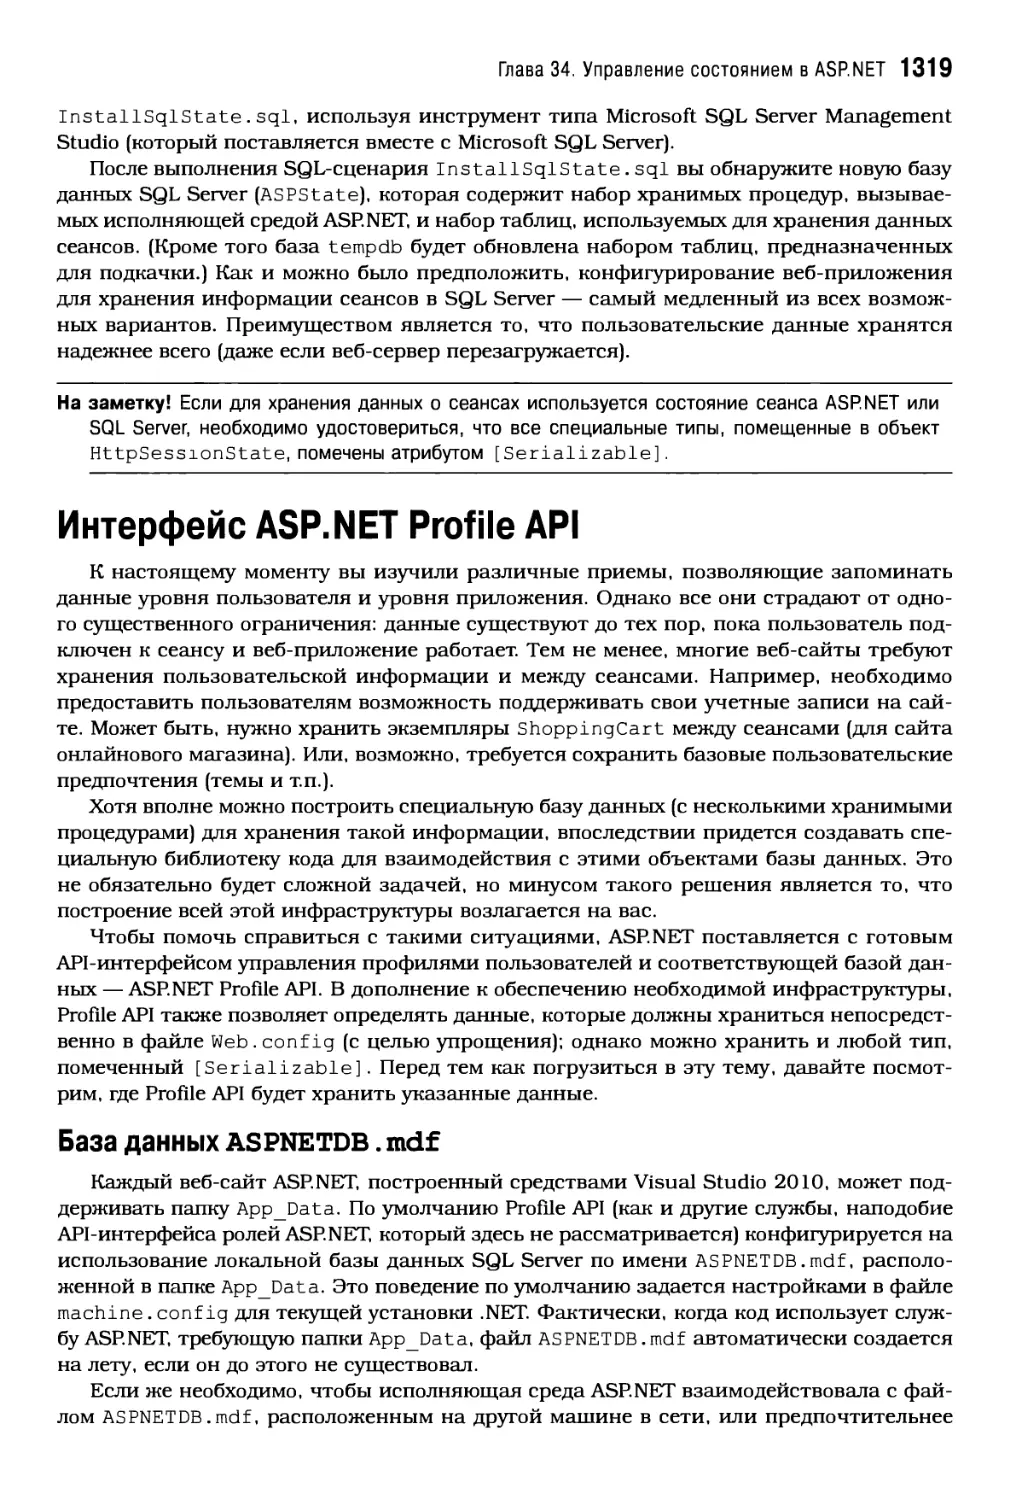 Интерфейс ASP.NET Profile API